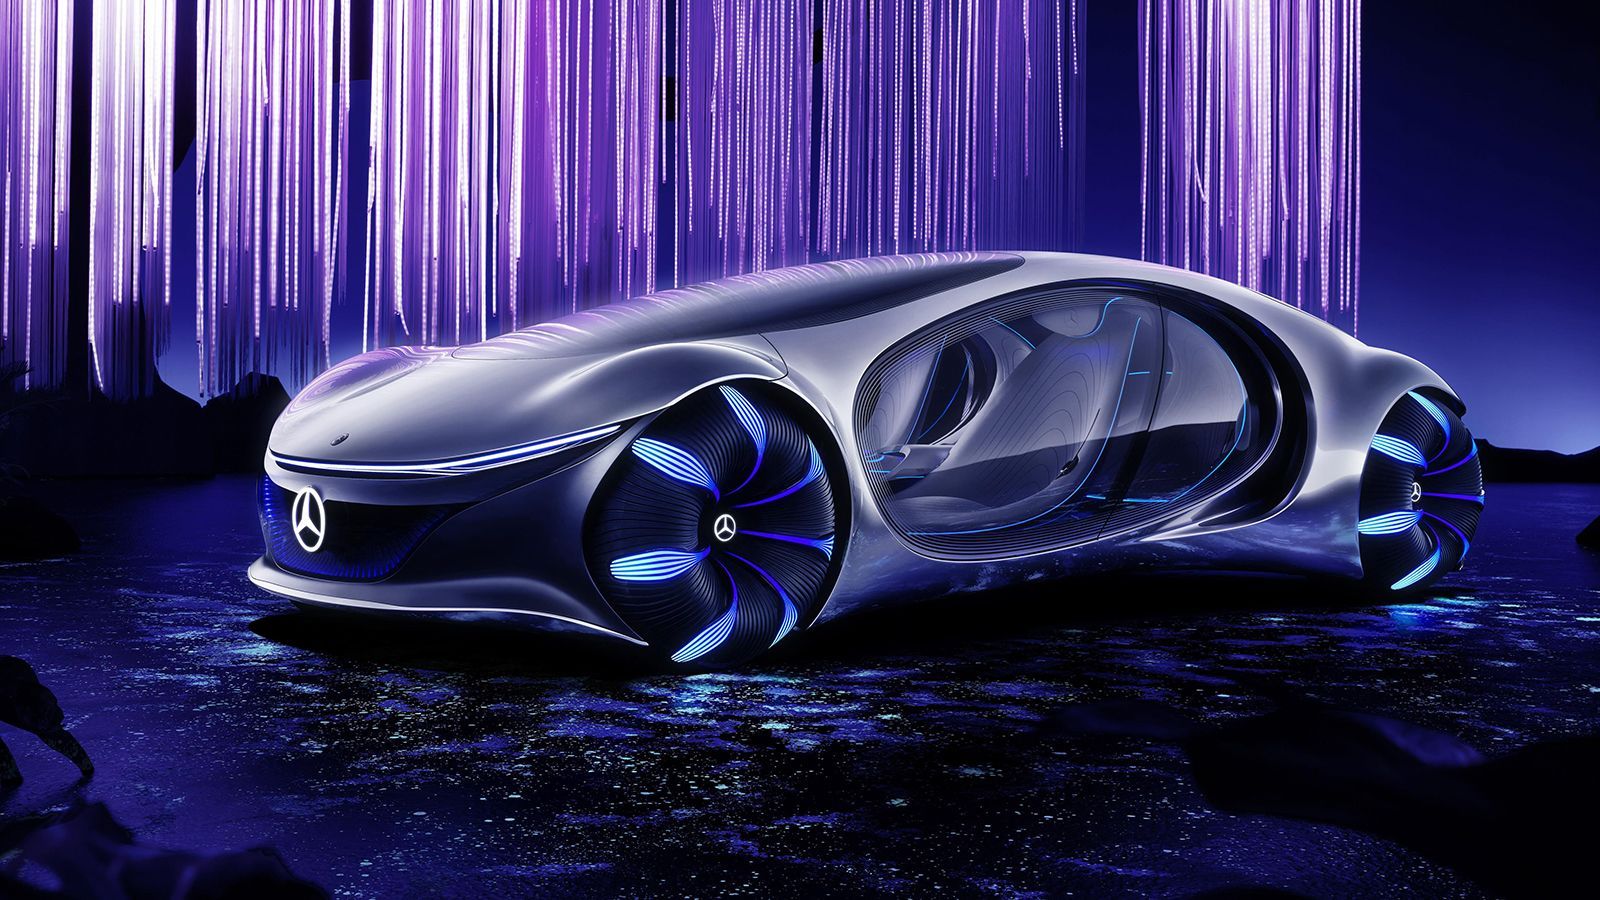 Mercedes' Vision AVTR Concept Embraces the 'Avatar' Aesthetic